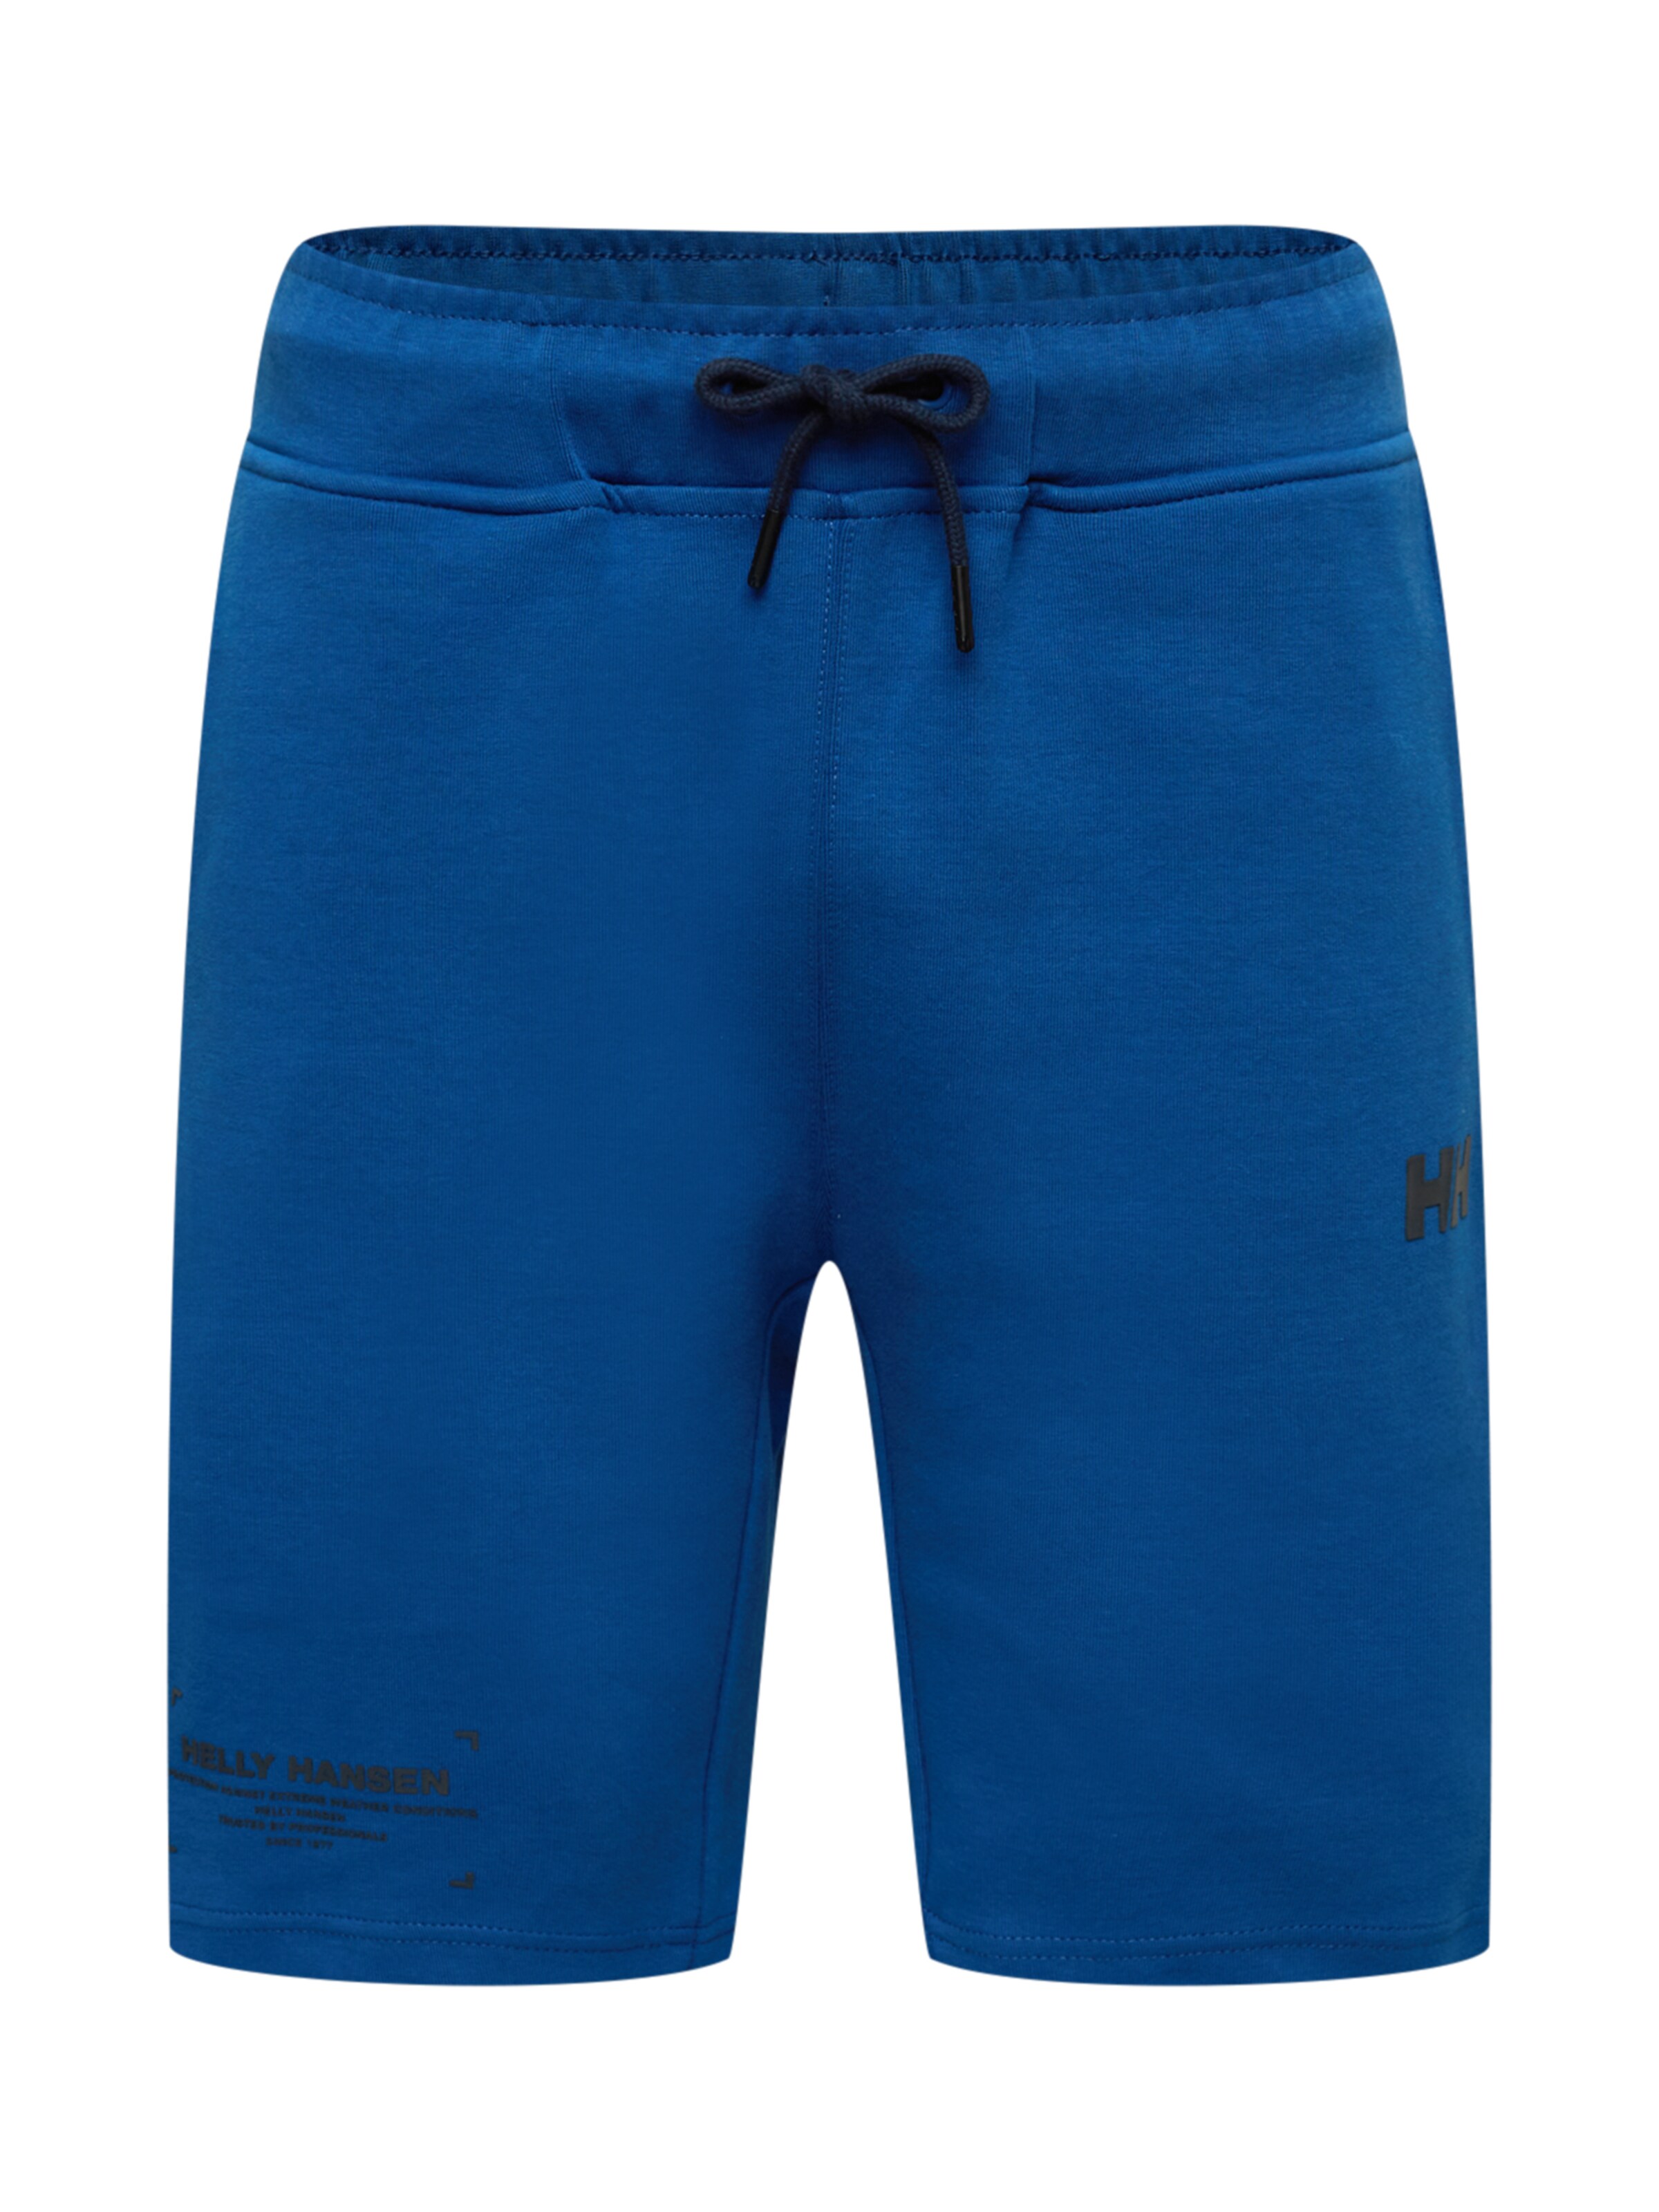 Männer Sportbekleidung HELLY HANSEN Shorts in Royalblau - RR98310